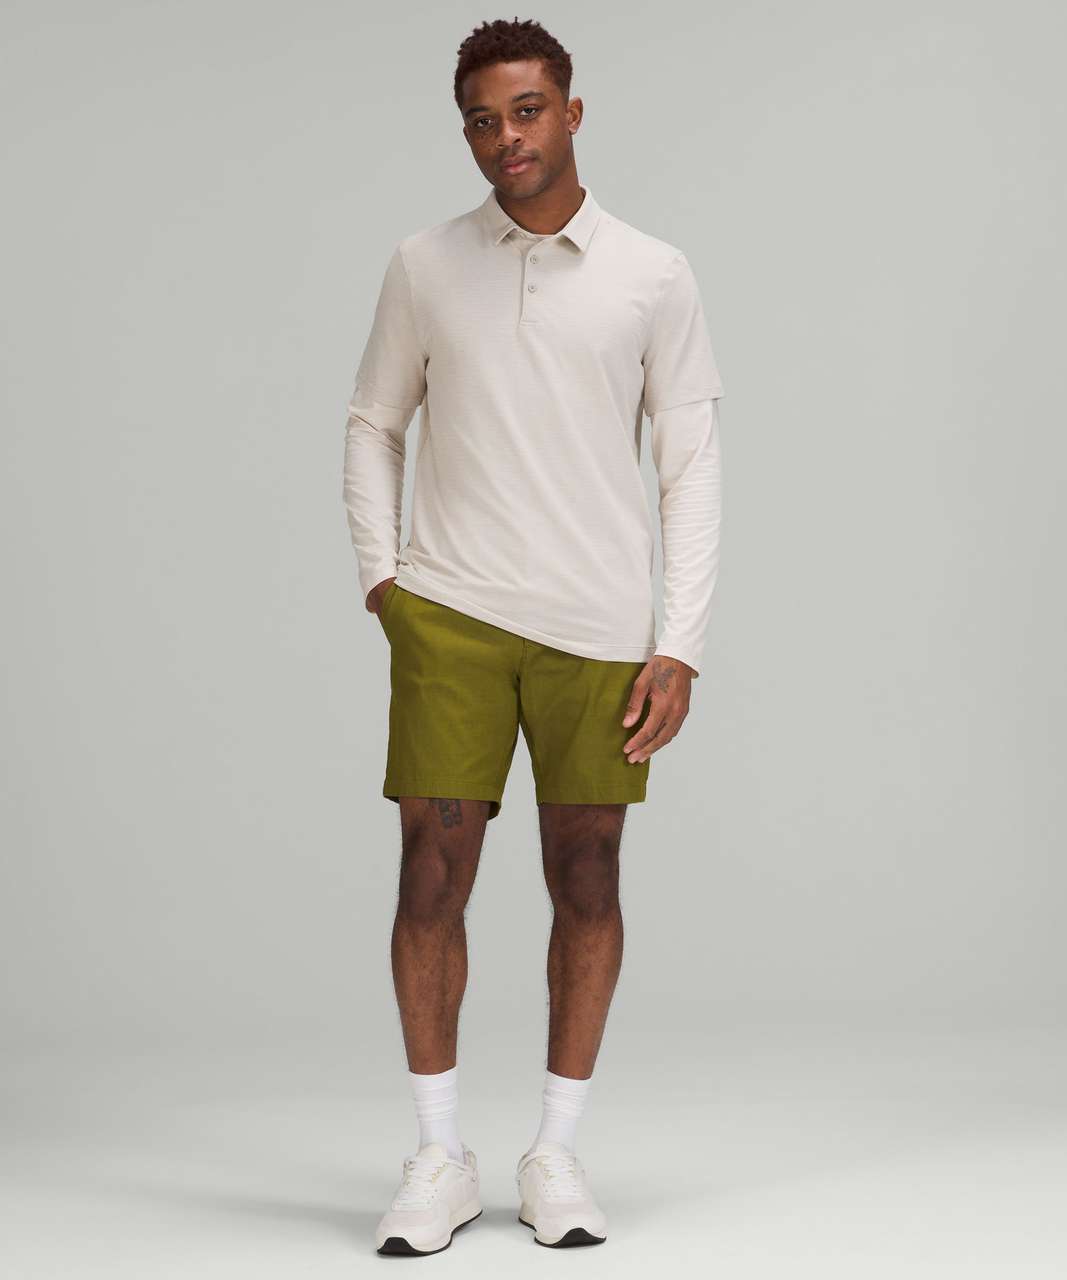 Lululemon Evolution Short Sleeve Polo Shirt *Pique Fabric - Heathered Raw Linen